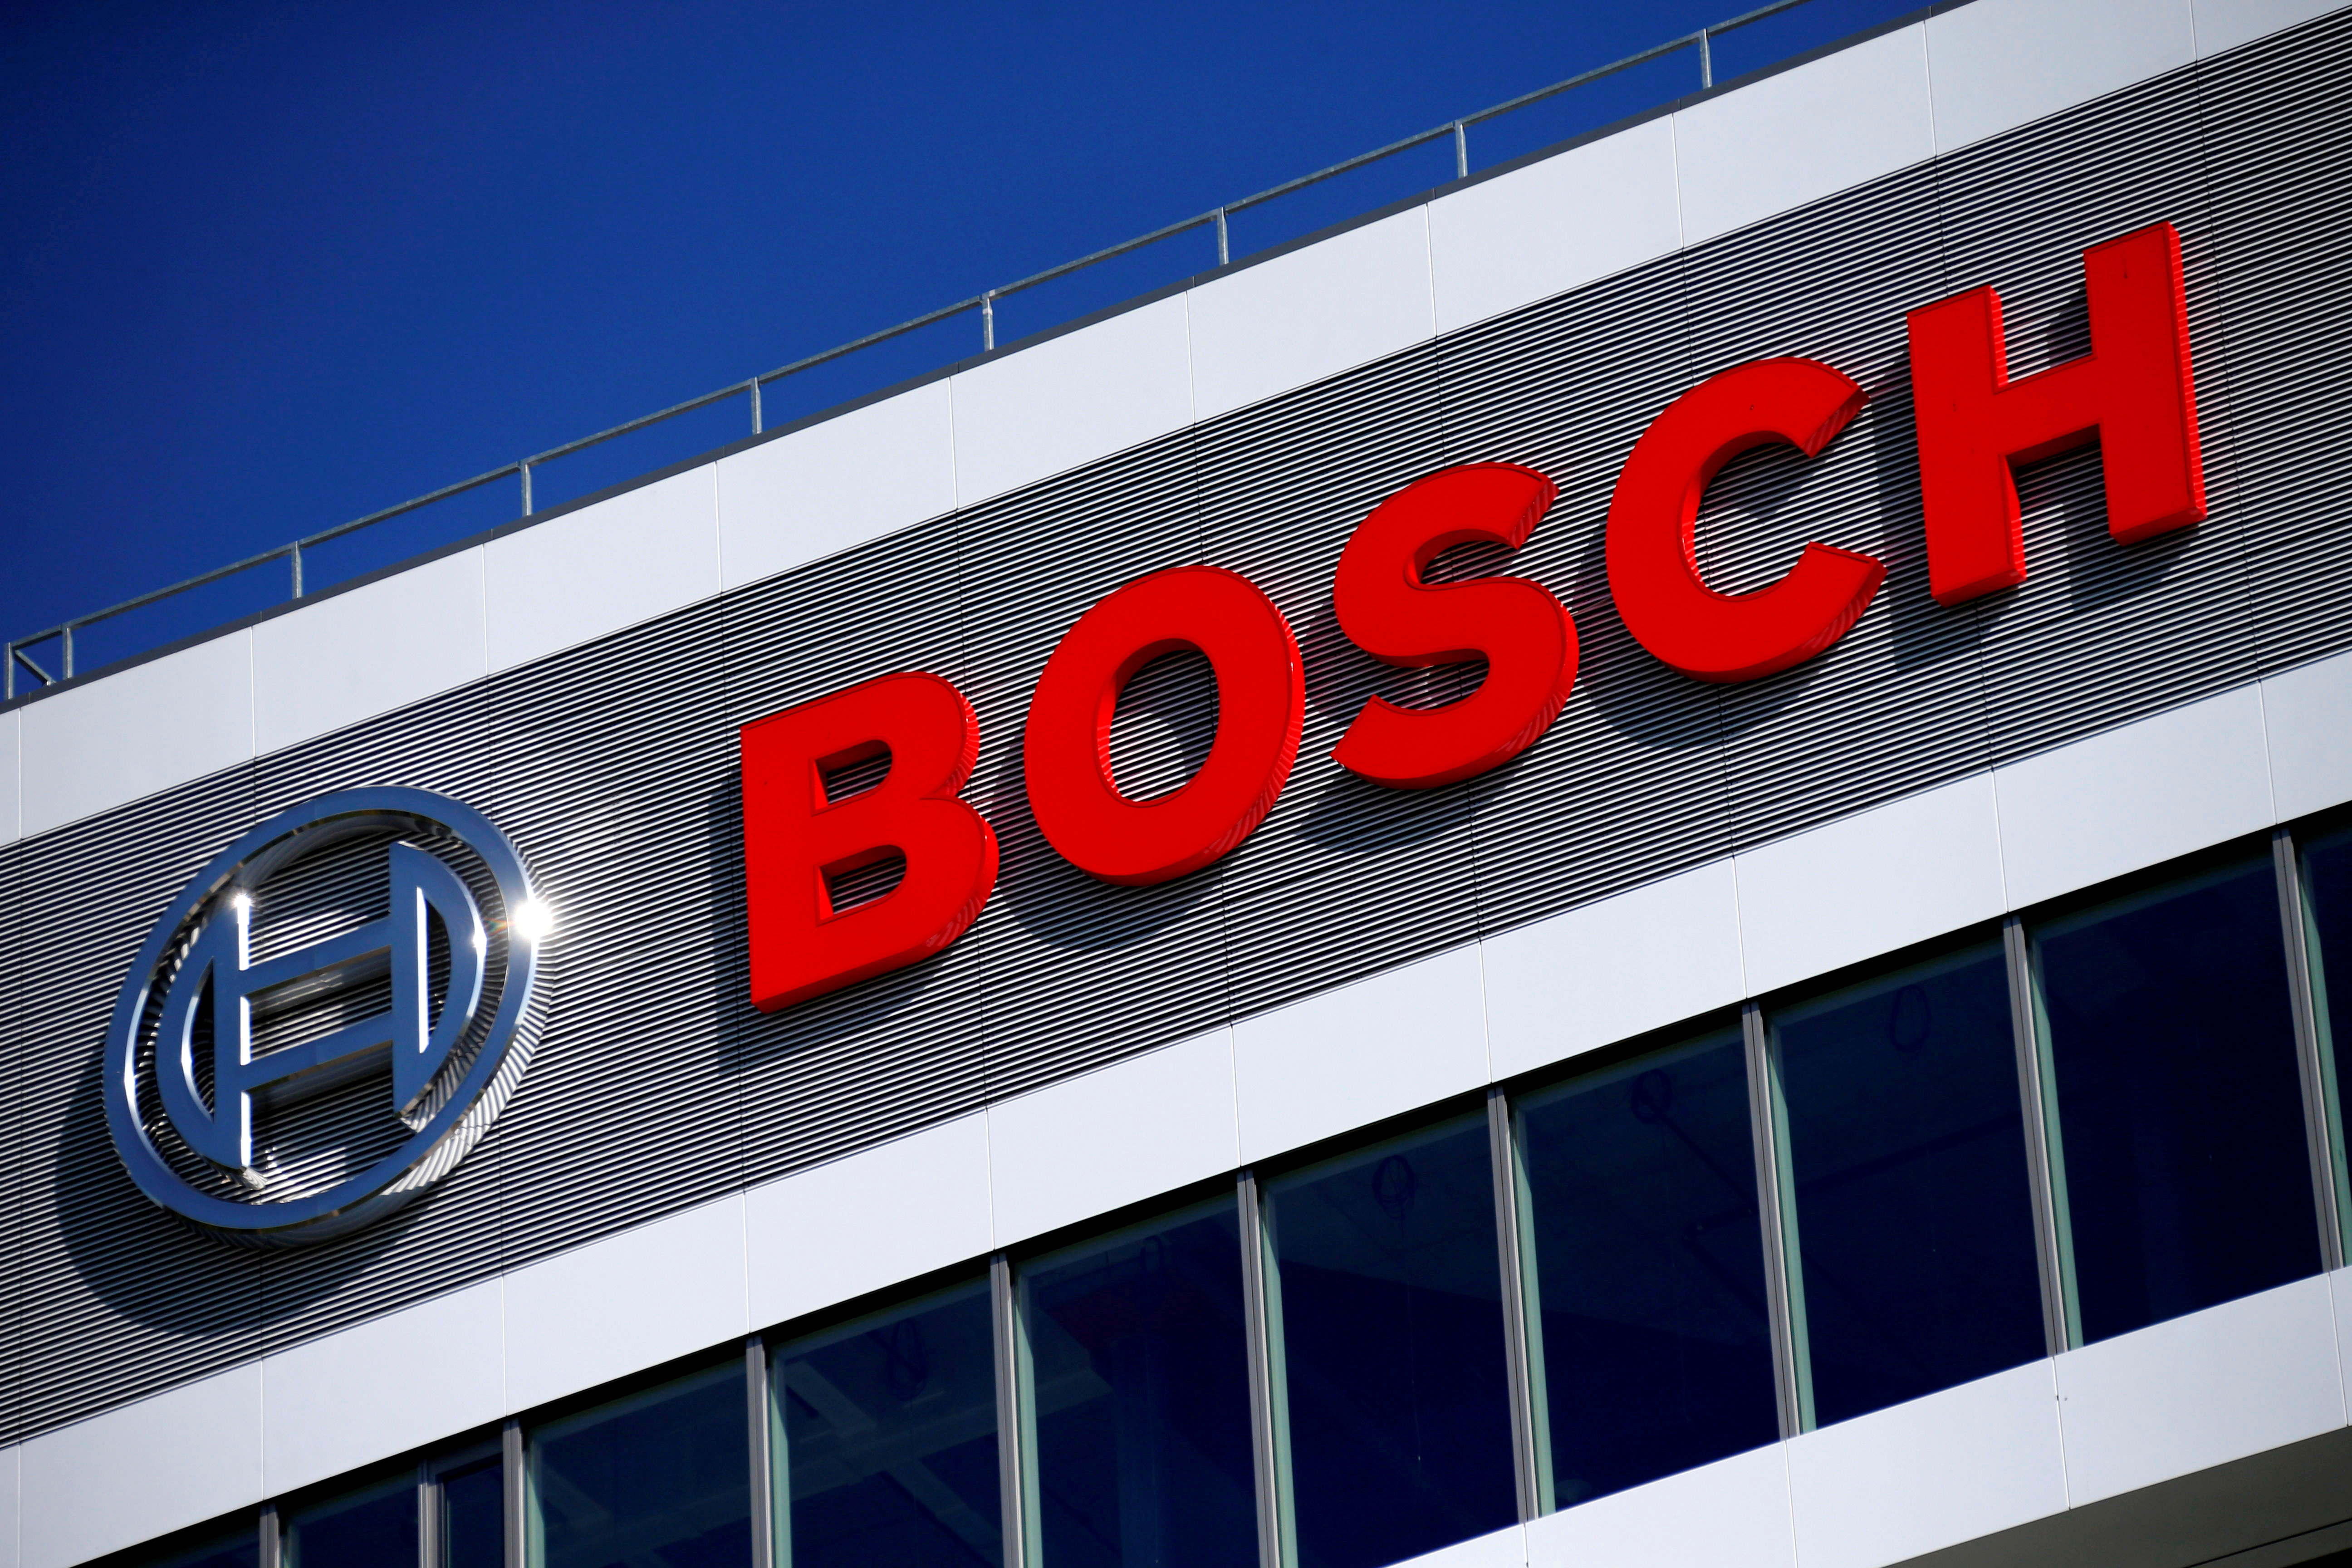 Planeet dealer Bruidegom Bosch opens German chip plant, its biggest-ever investment | Reuters